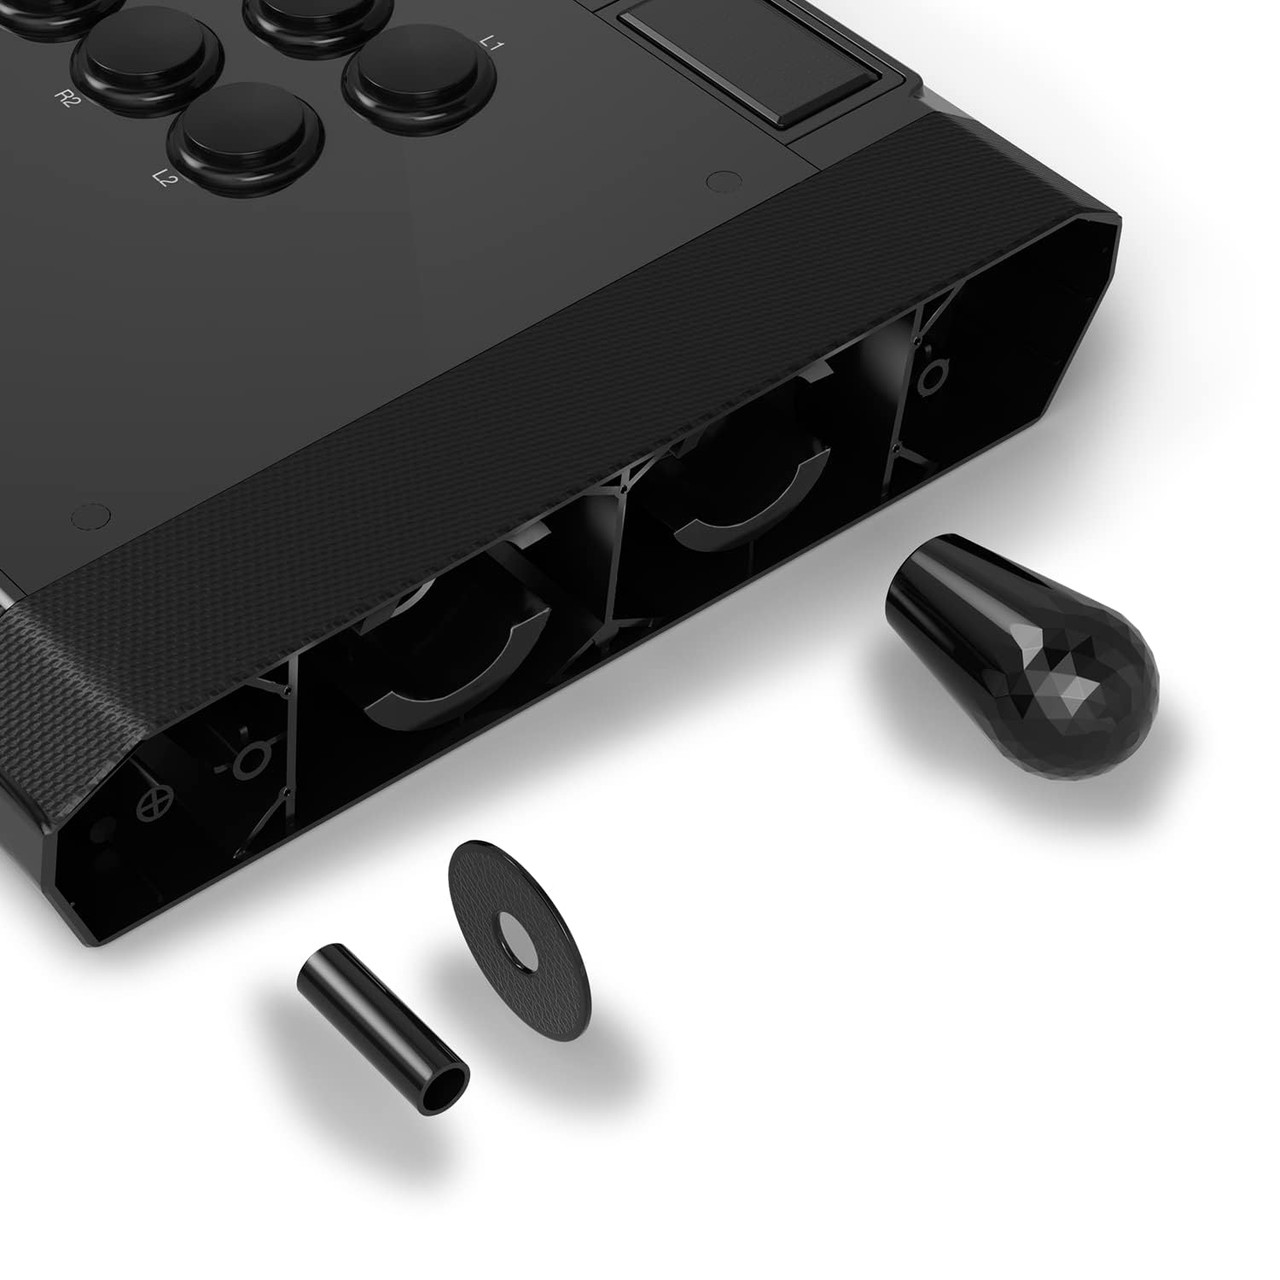 Qanba Titan Arcade joystick for PlayStation 5, 4 and PC Available